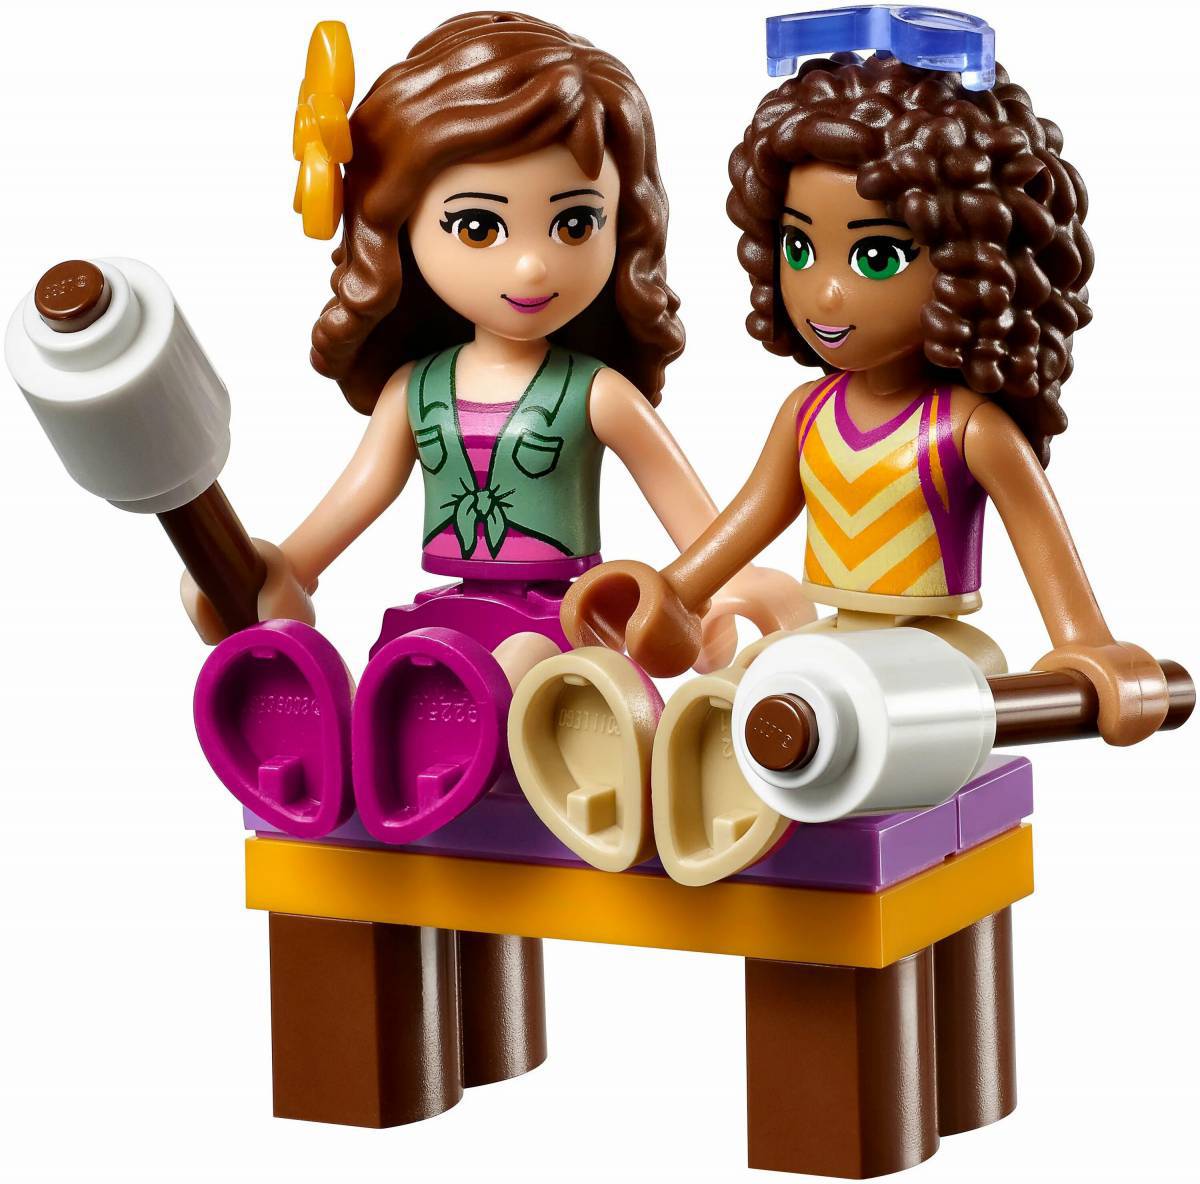 Lego friends #20